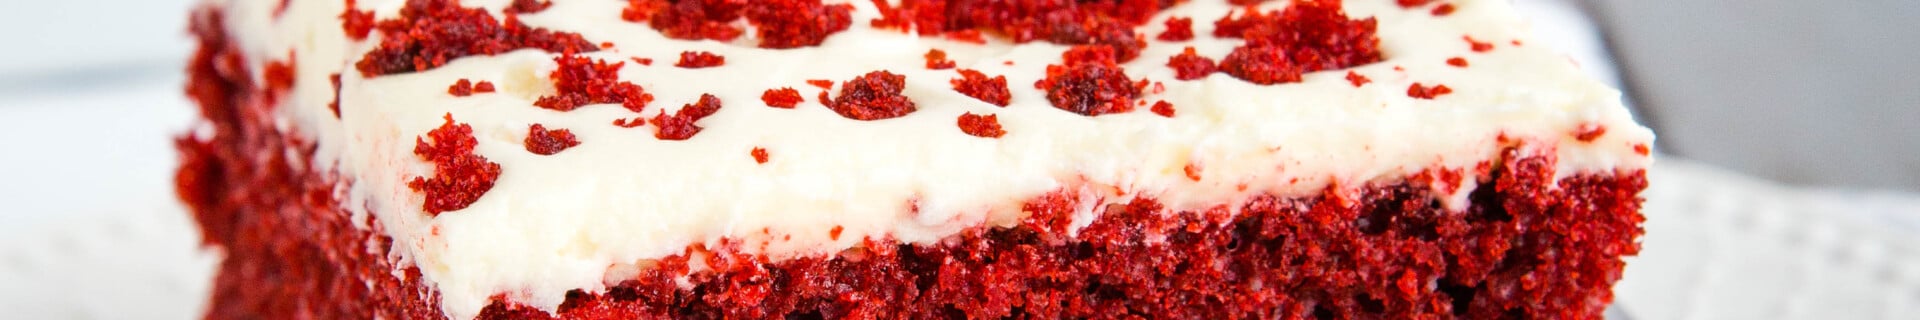 slice of homemade red velvet cake with cream cheese frosting on white plate